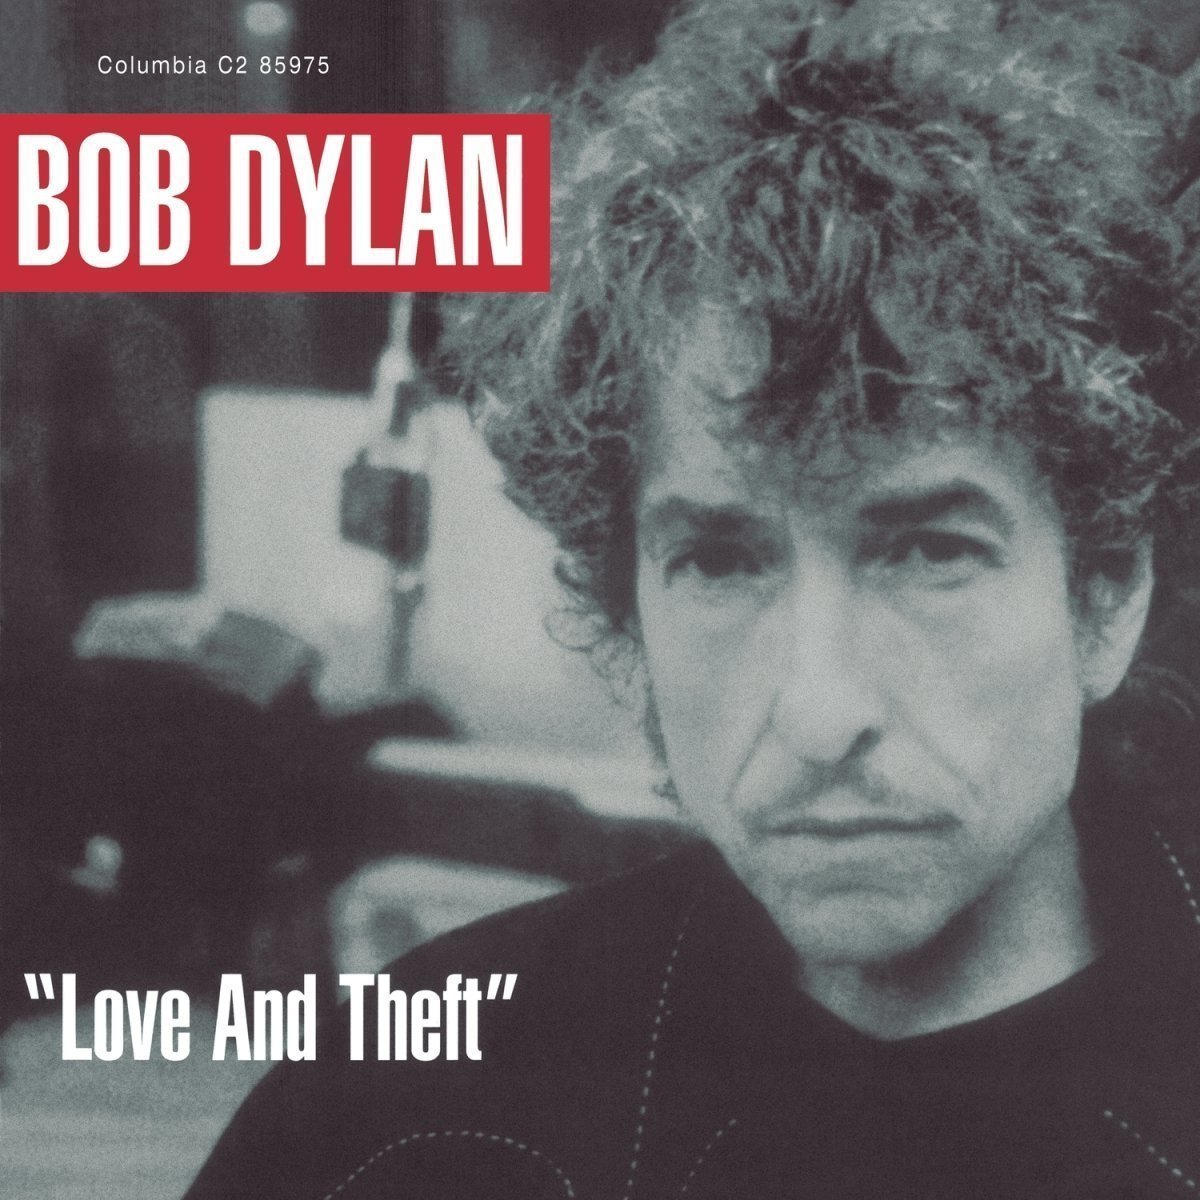 Vinyl Record Bob Dylan Love and Theft (2 LP)